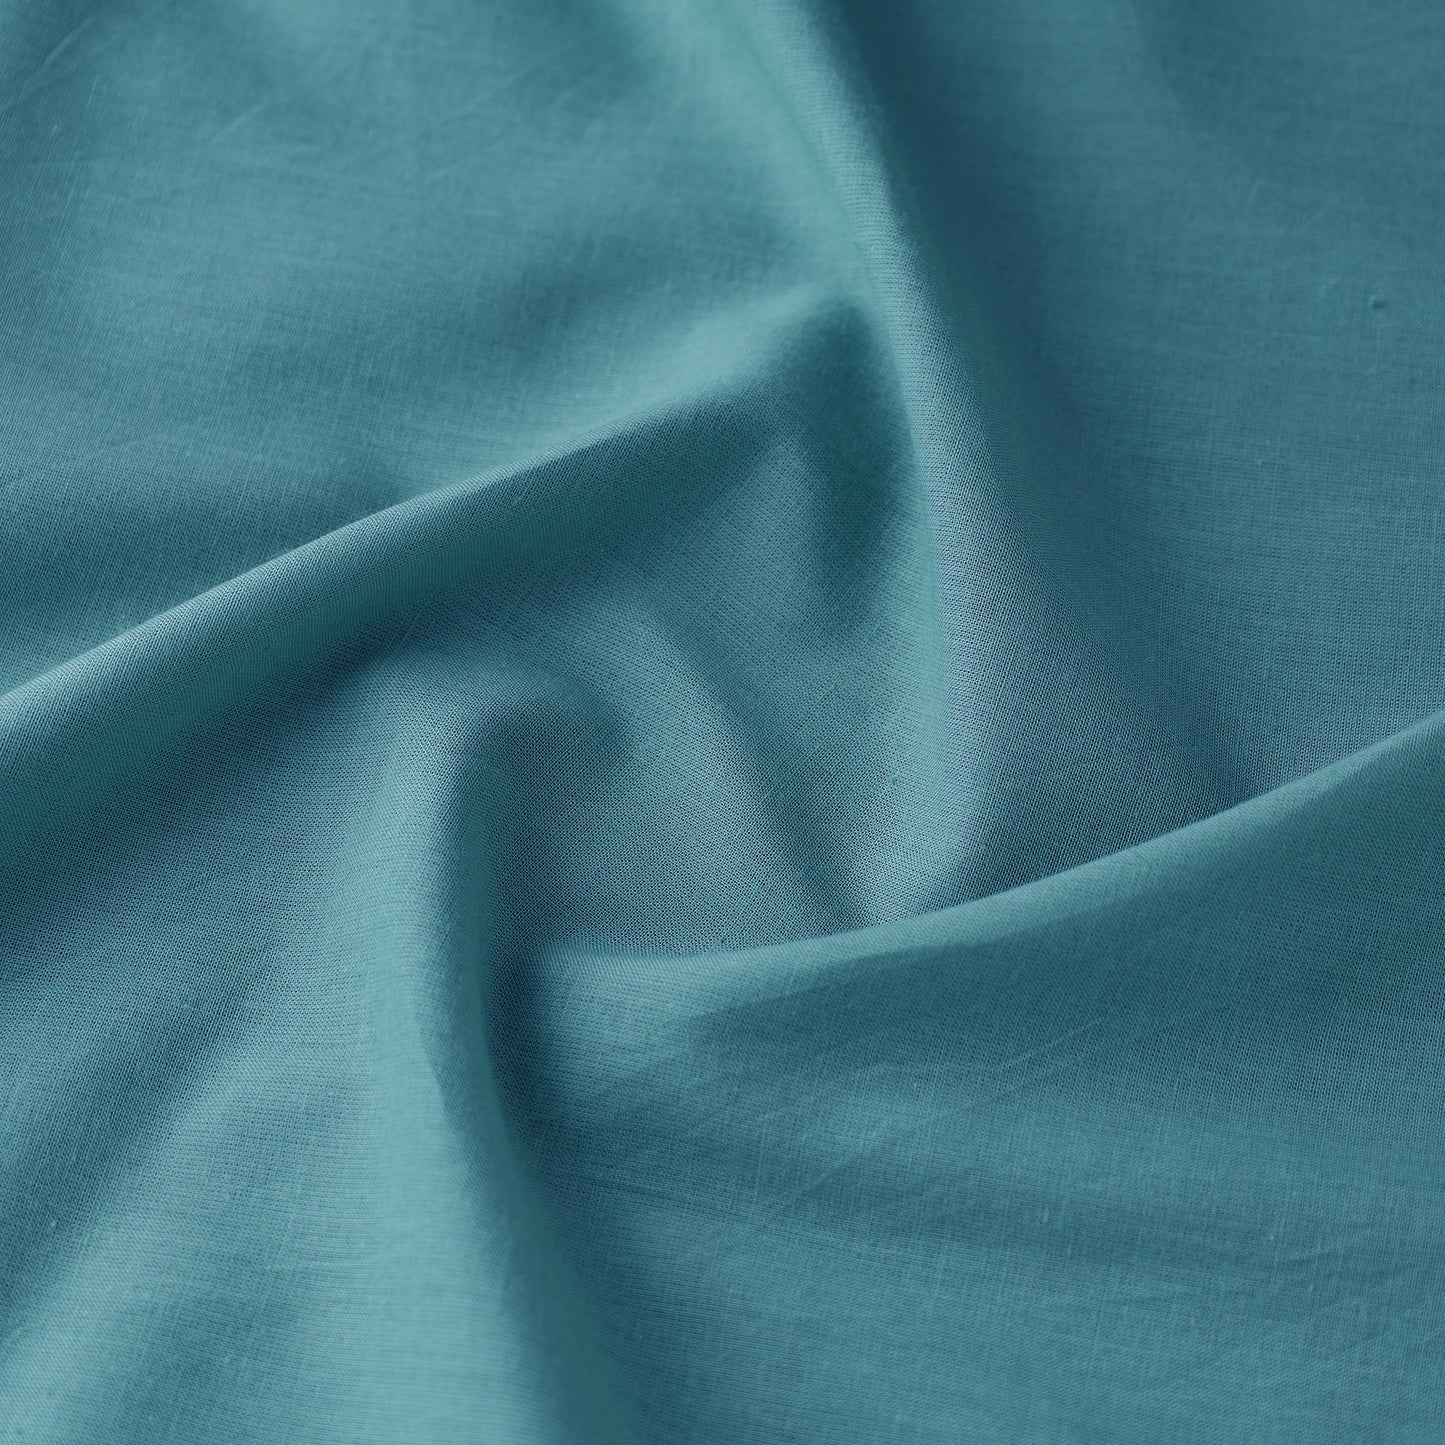 Blue - Prewashed Plain Dyed Cotton Fabric 60